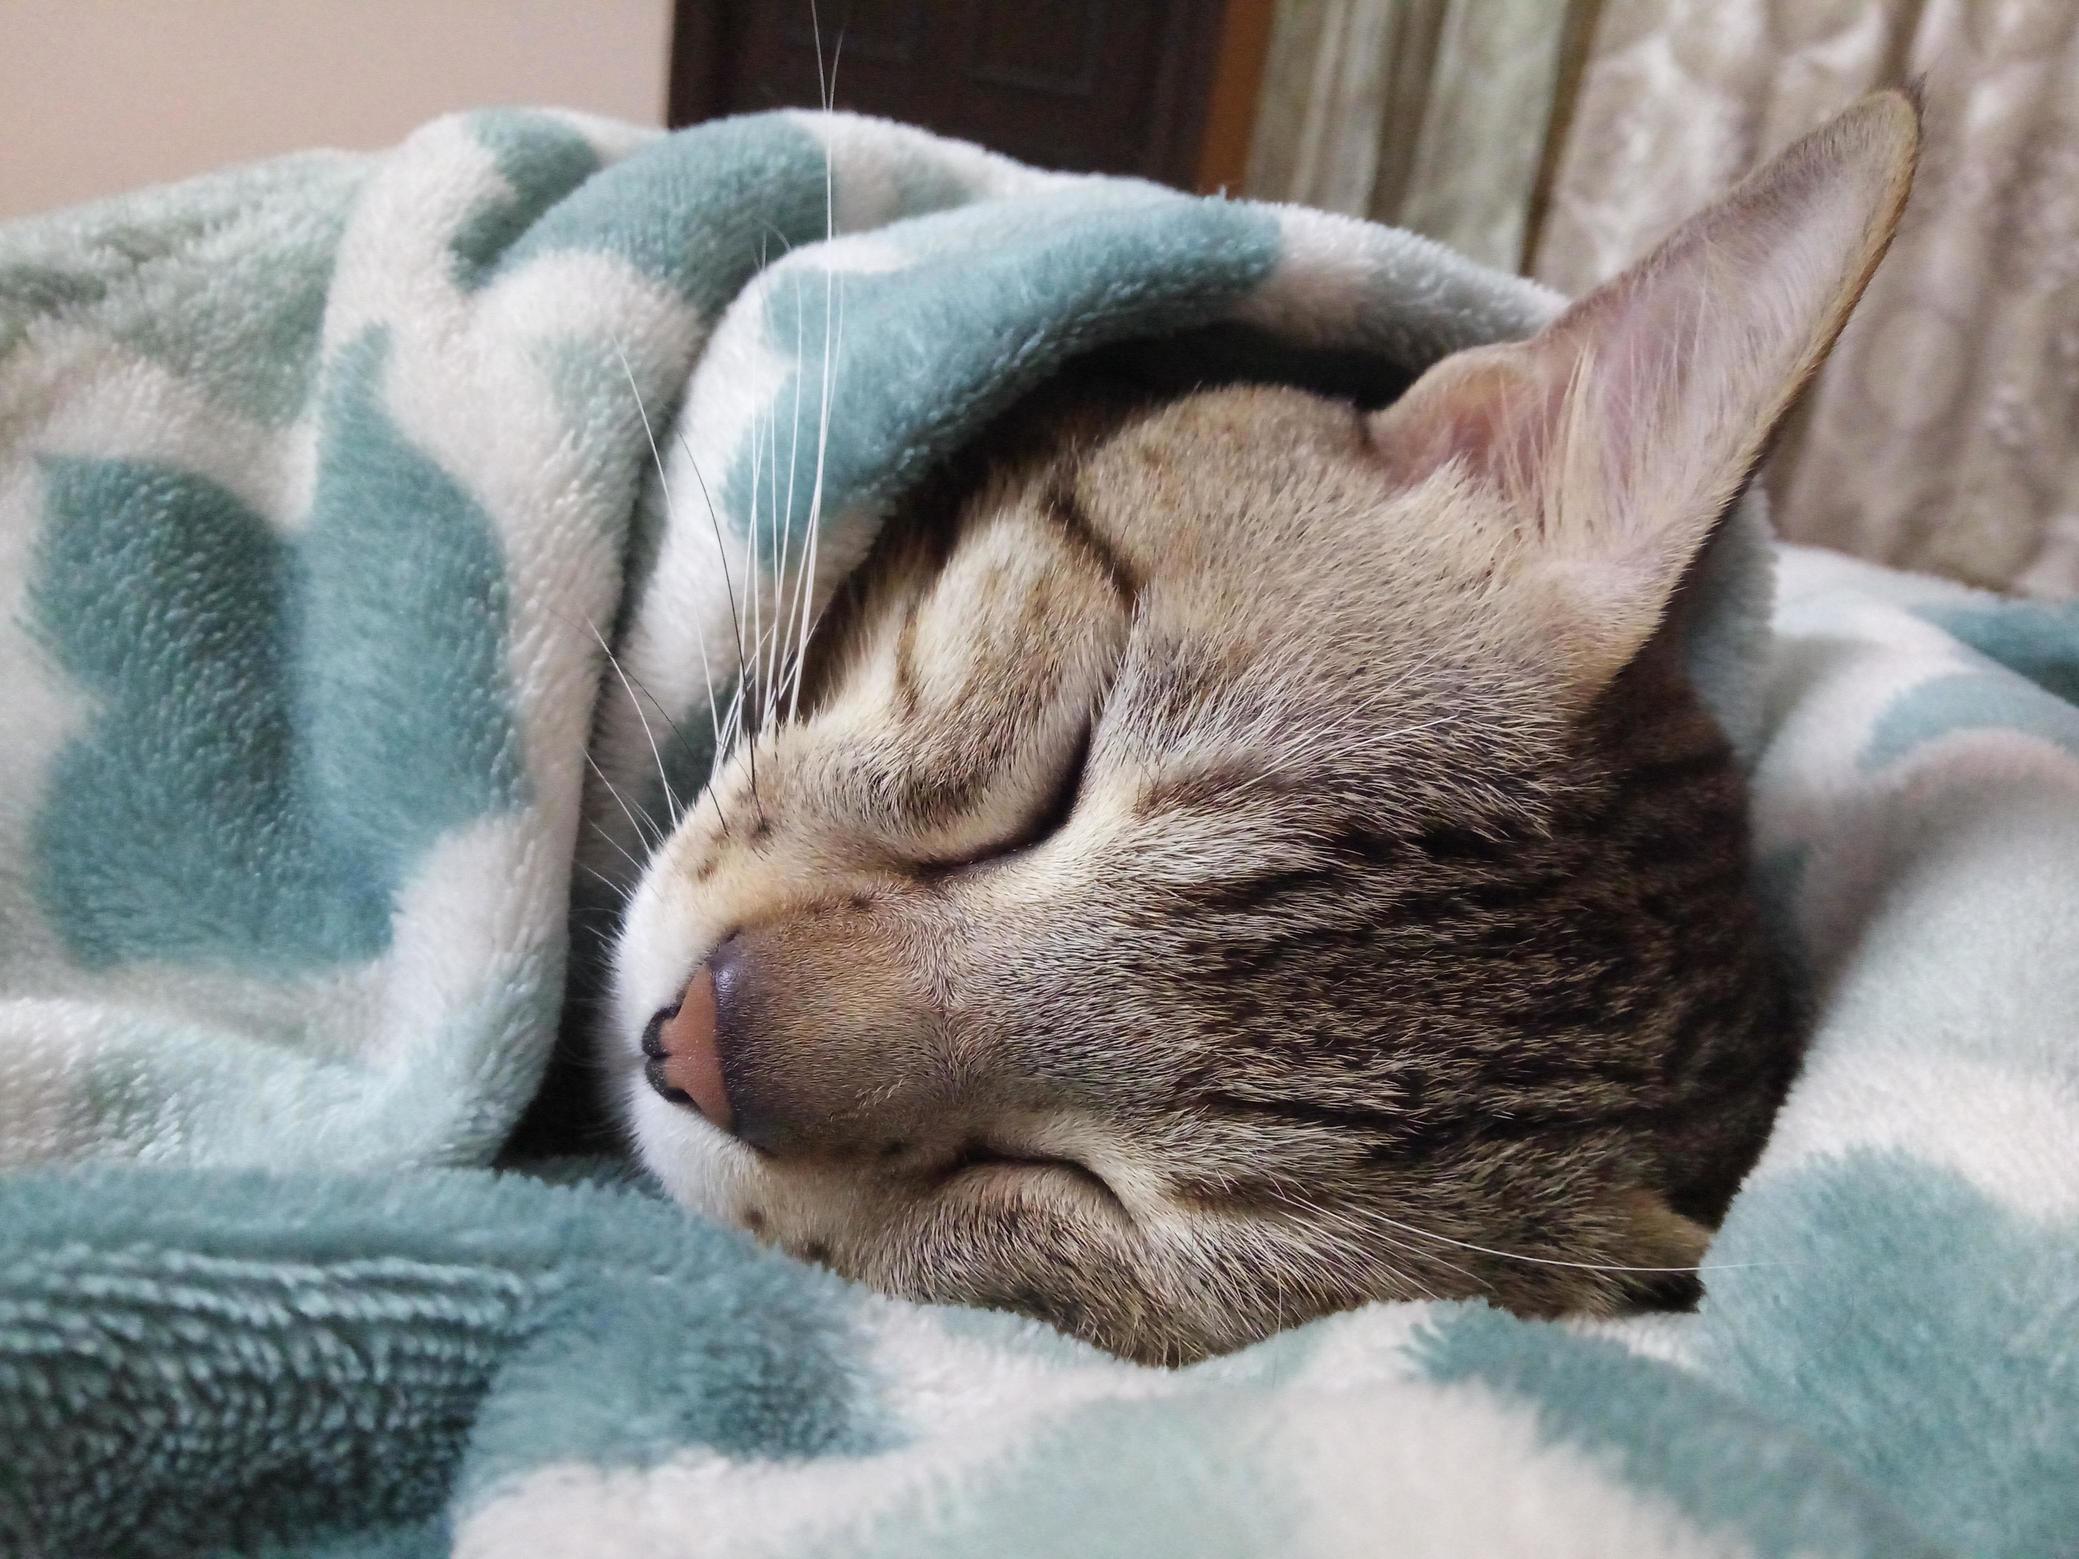 I think casper likes his new blanket